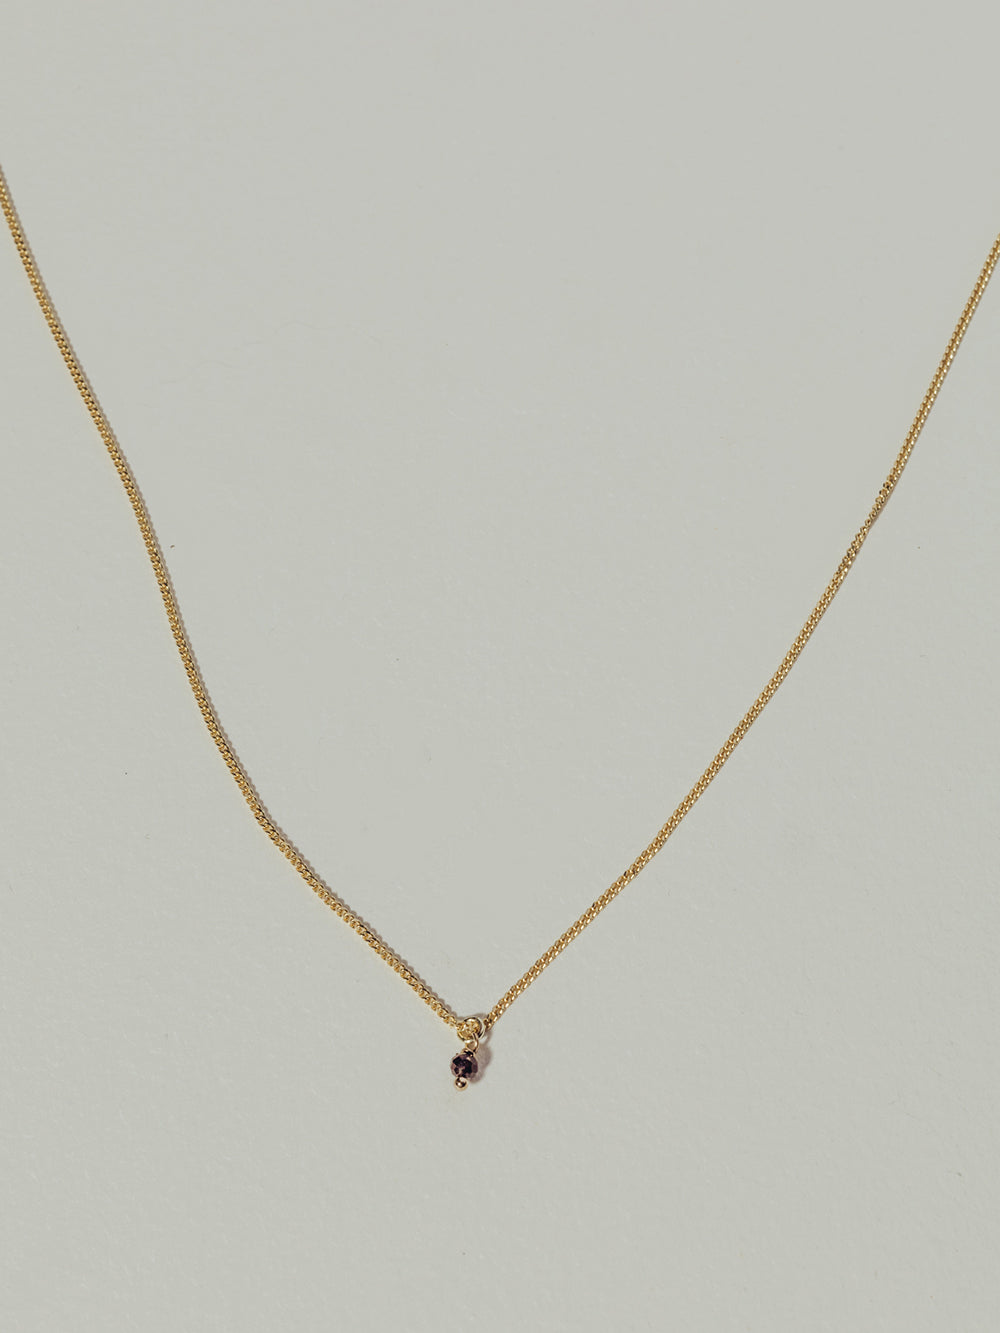 Birthstone January - Red Garnet | 14K Solid Gold